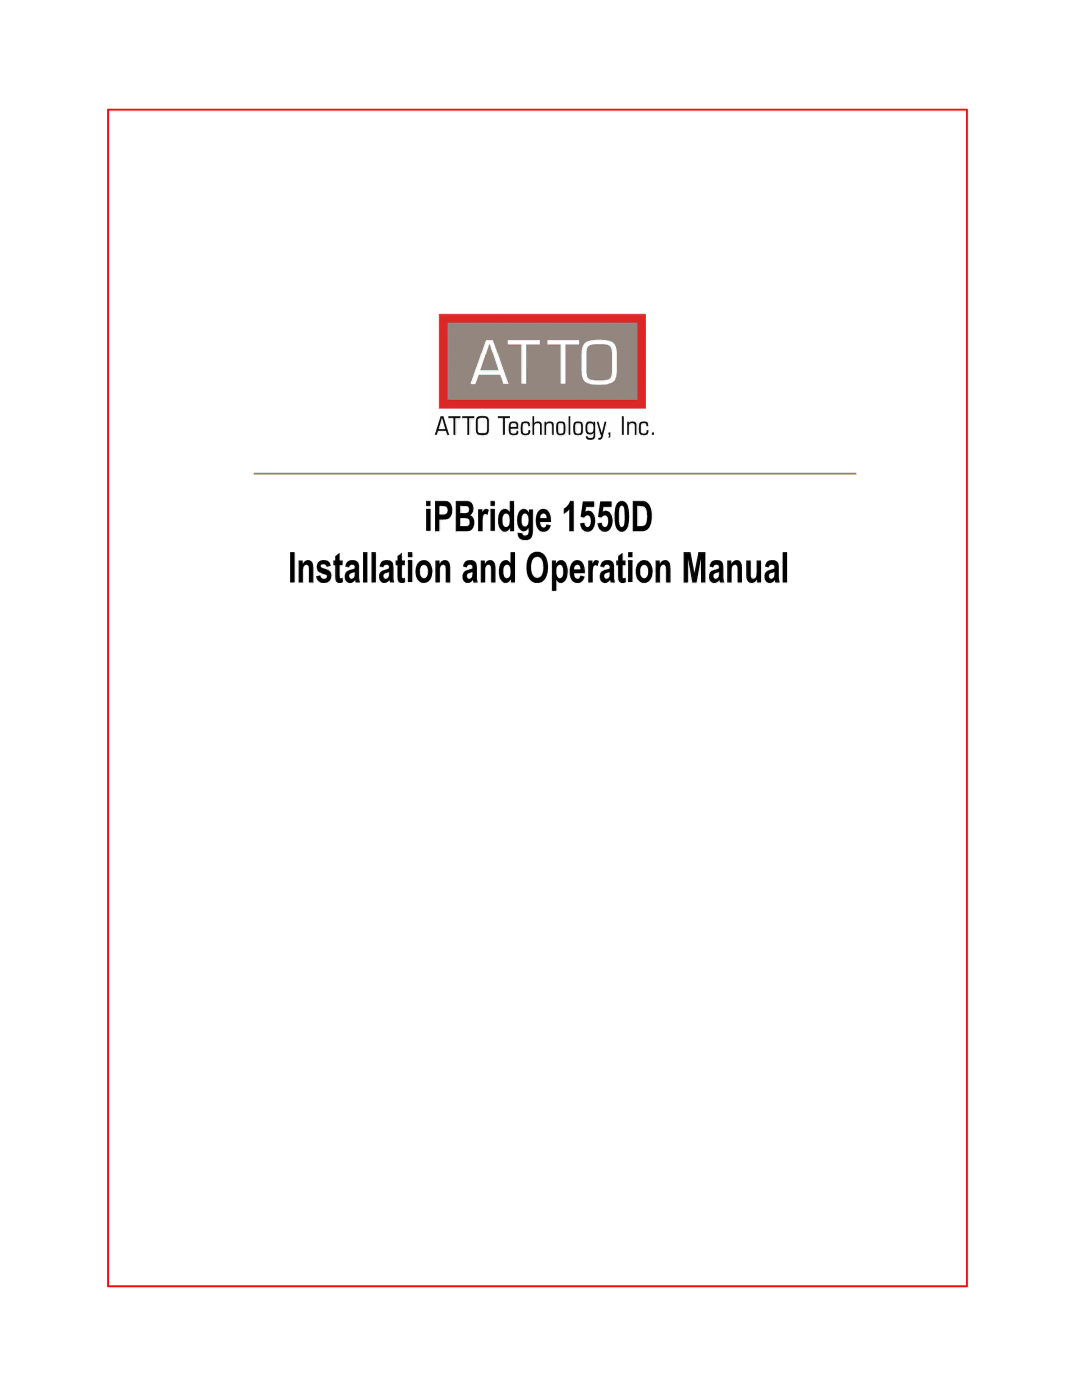 ATTO Technology operation manual IPBridge 1550D 